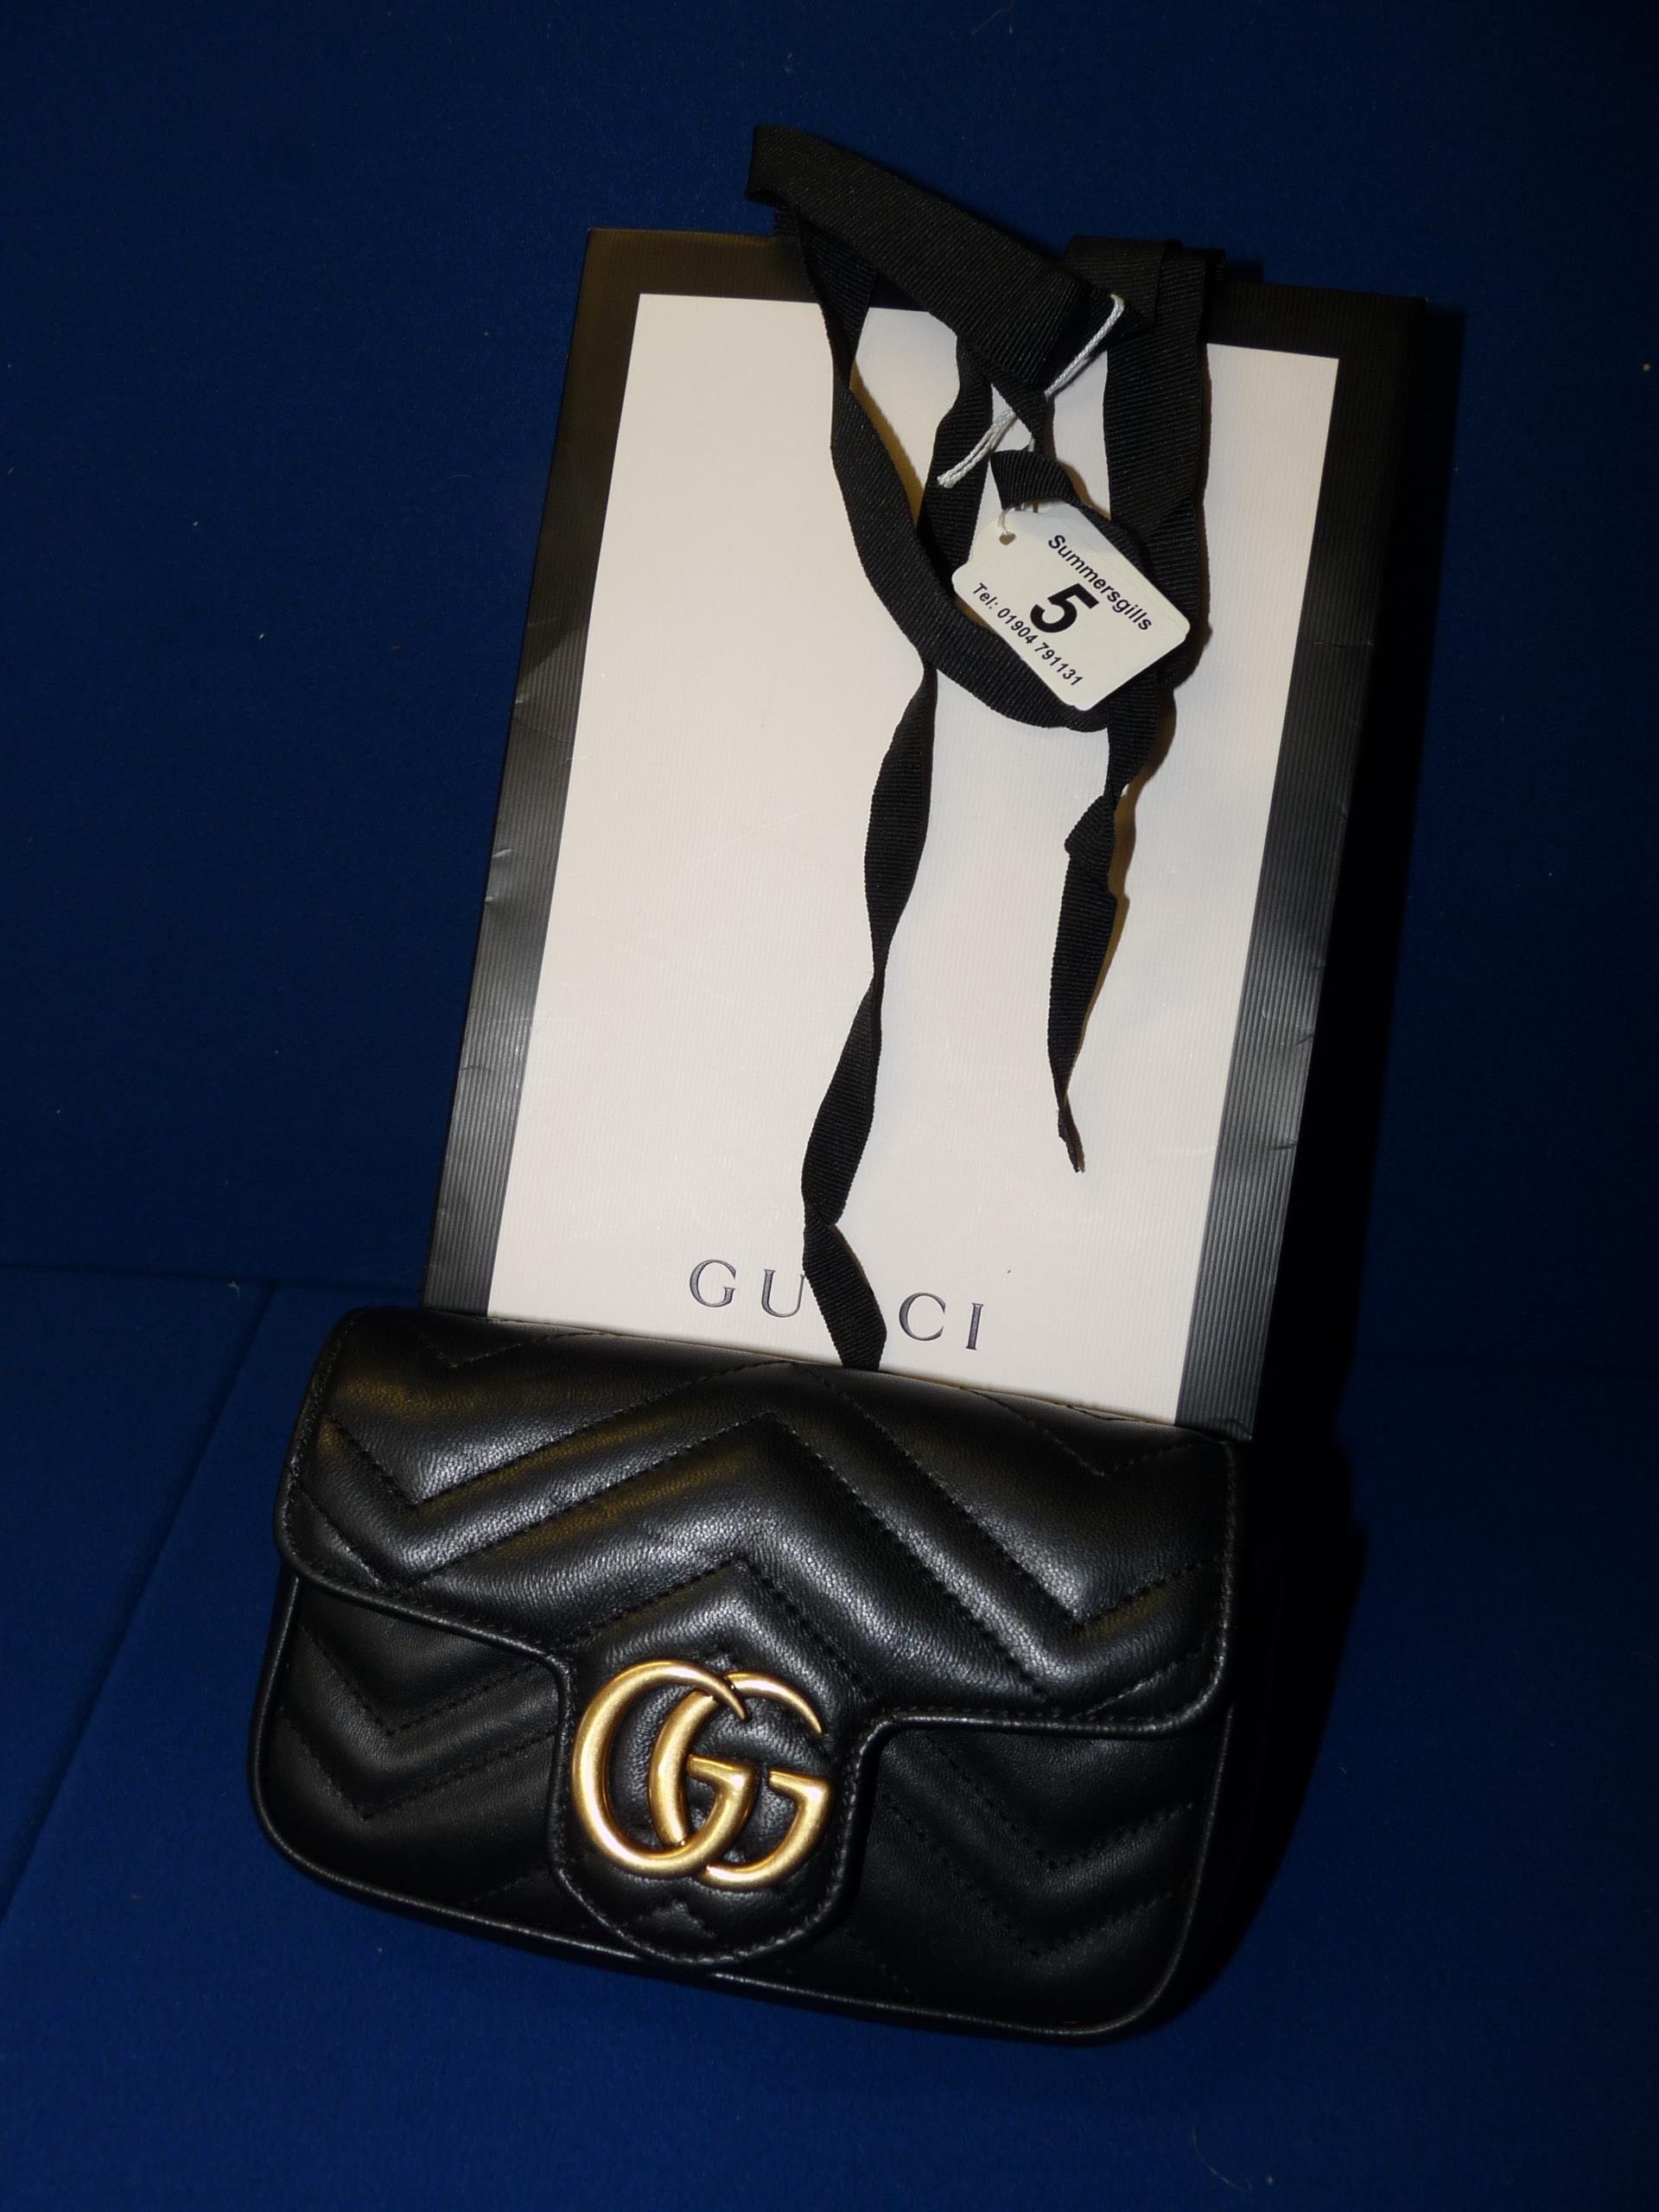 Gucci Marmont Super mini bag in Black Calf skin leather H 4" x 6.5" x d 1.75" Pre owned grade A- - Image 6 of 7